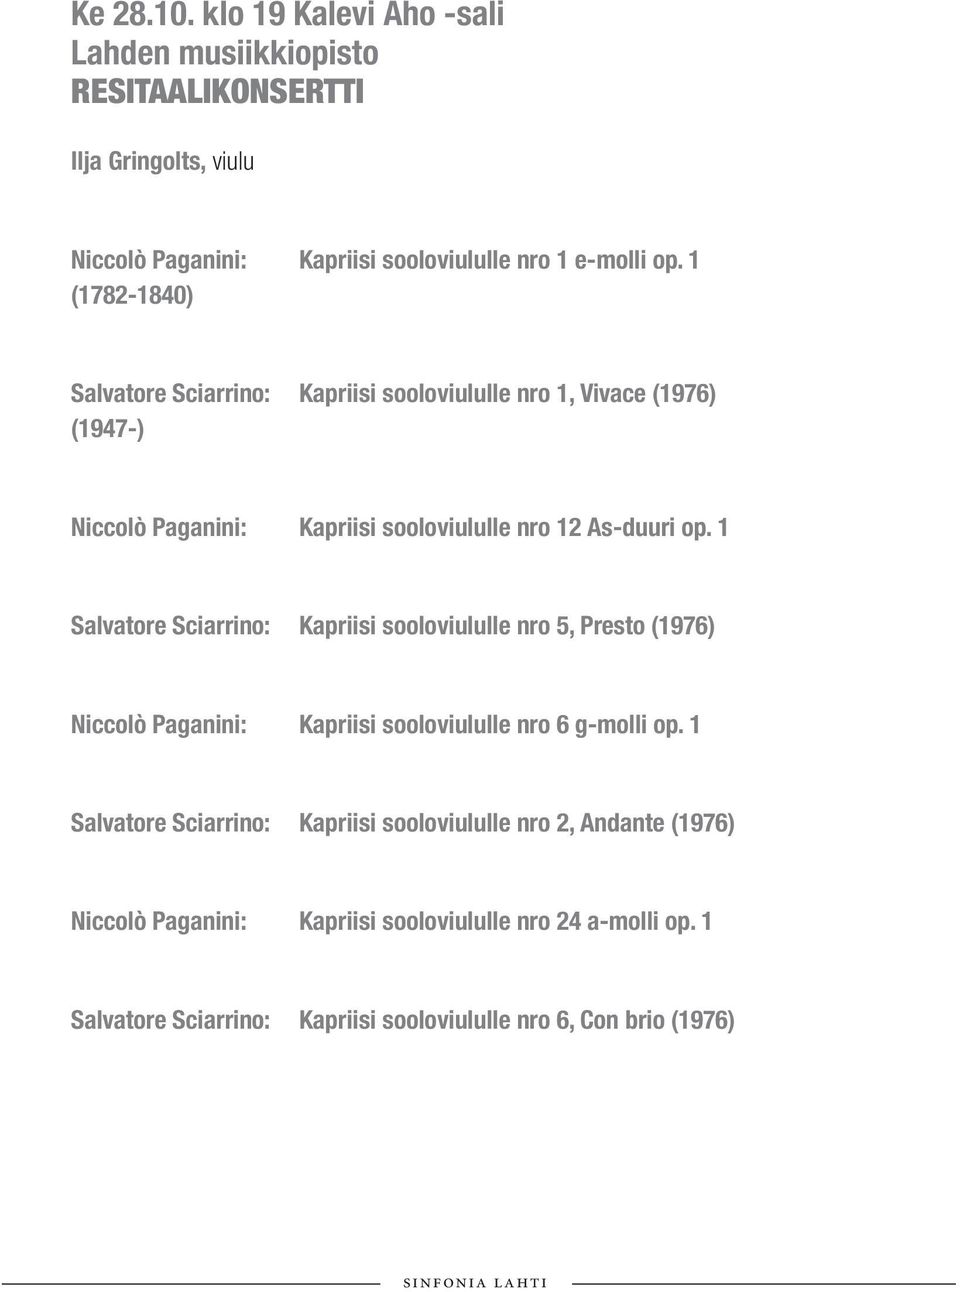 1 Salvatore Sciarrino: Kapriisi sooloviululle nro 5, Presto (1976) Niccolò Paganini: Kapriisi sooloviululle nro 6 g-molli op.